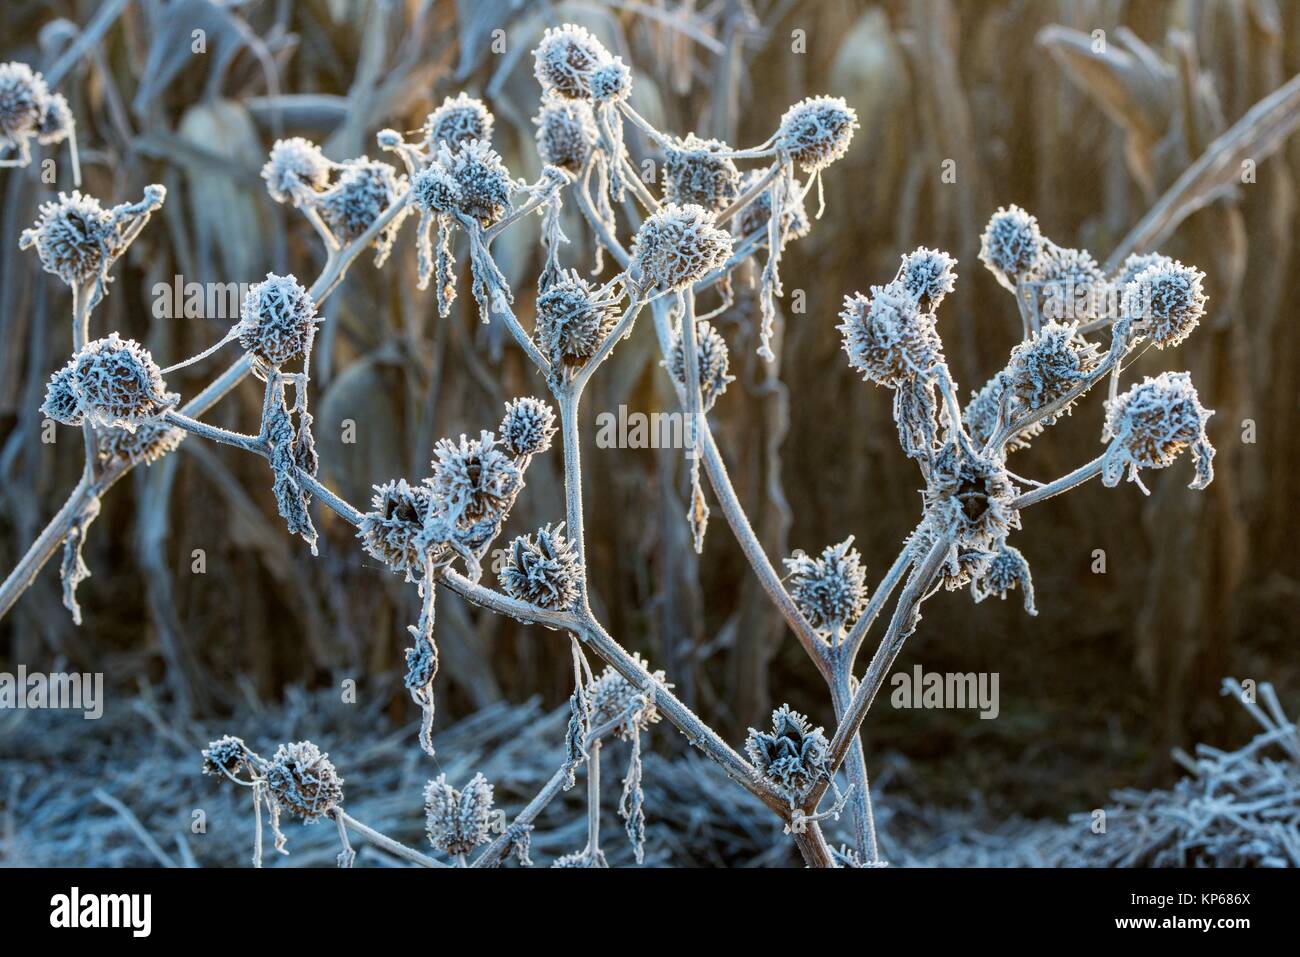 Campo de maíz congelado fotografías e imágenes de alta resolución - Alamy